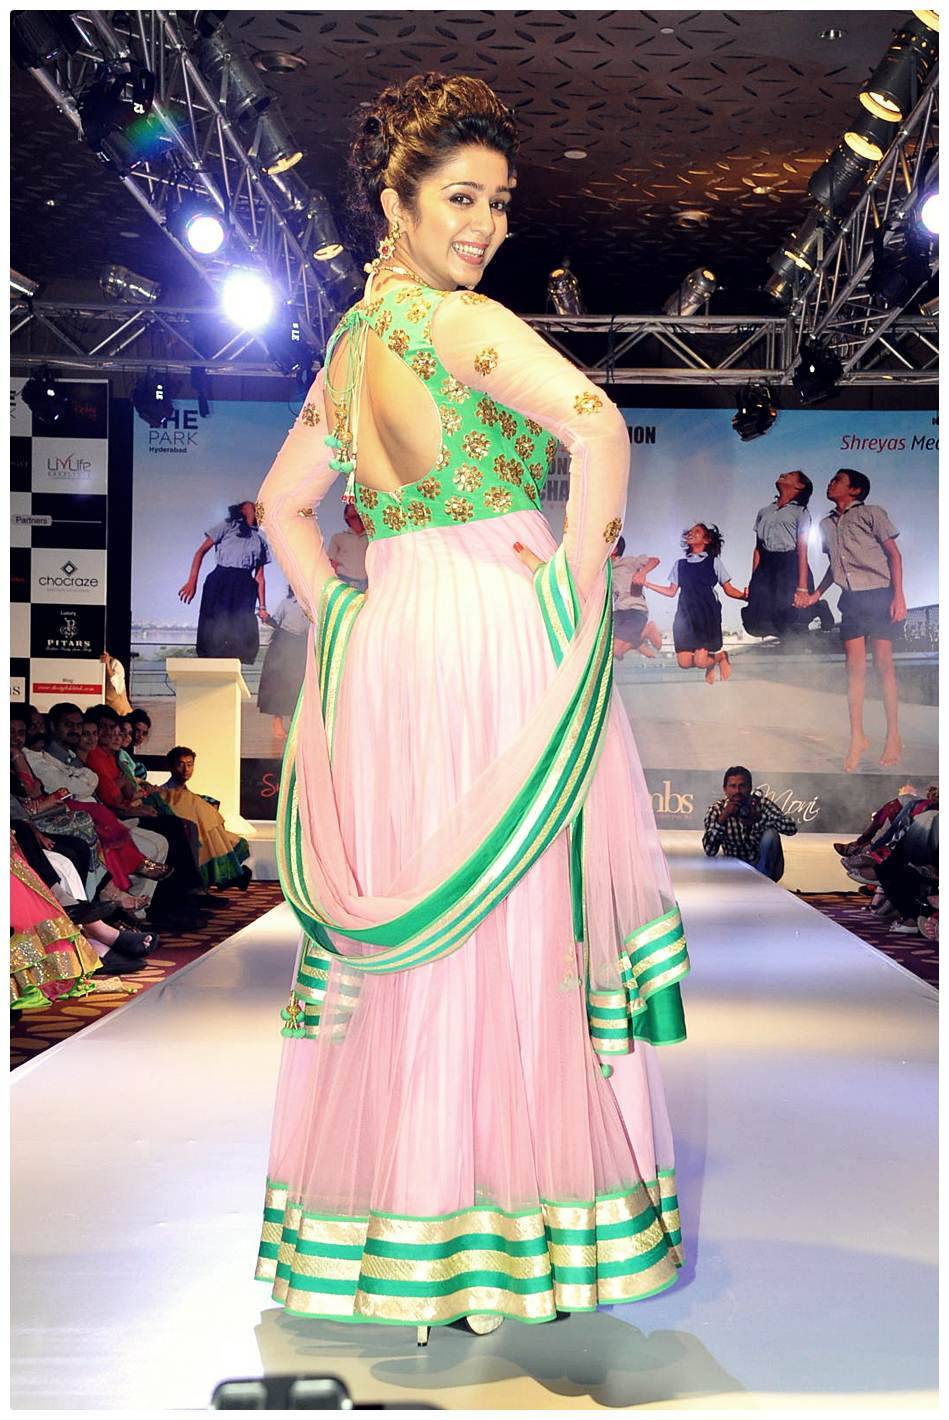 Charmi Ramp Walk at Passionate Foundation Fashion show photos | Picture 477516